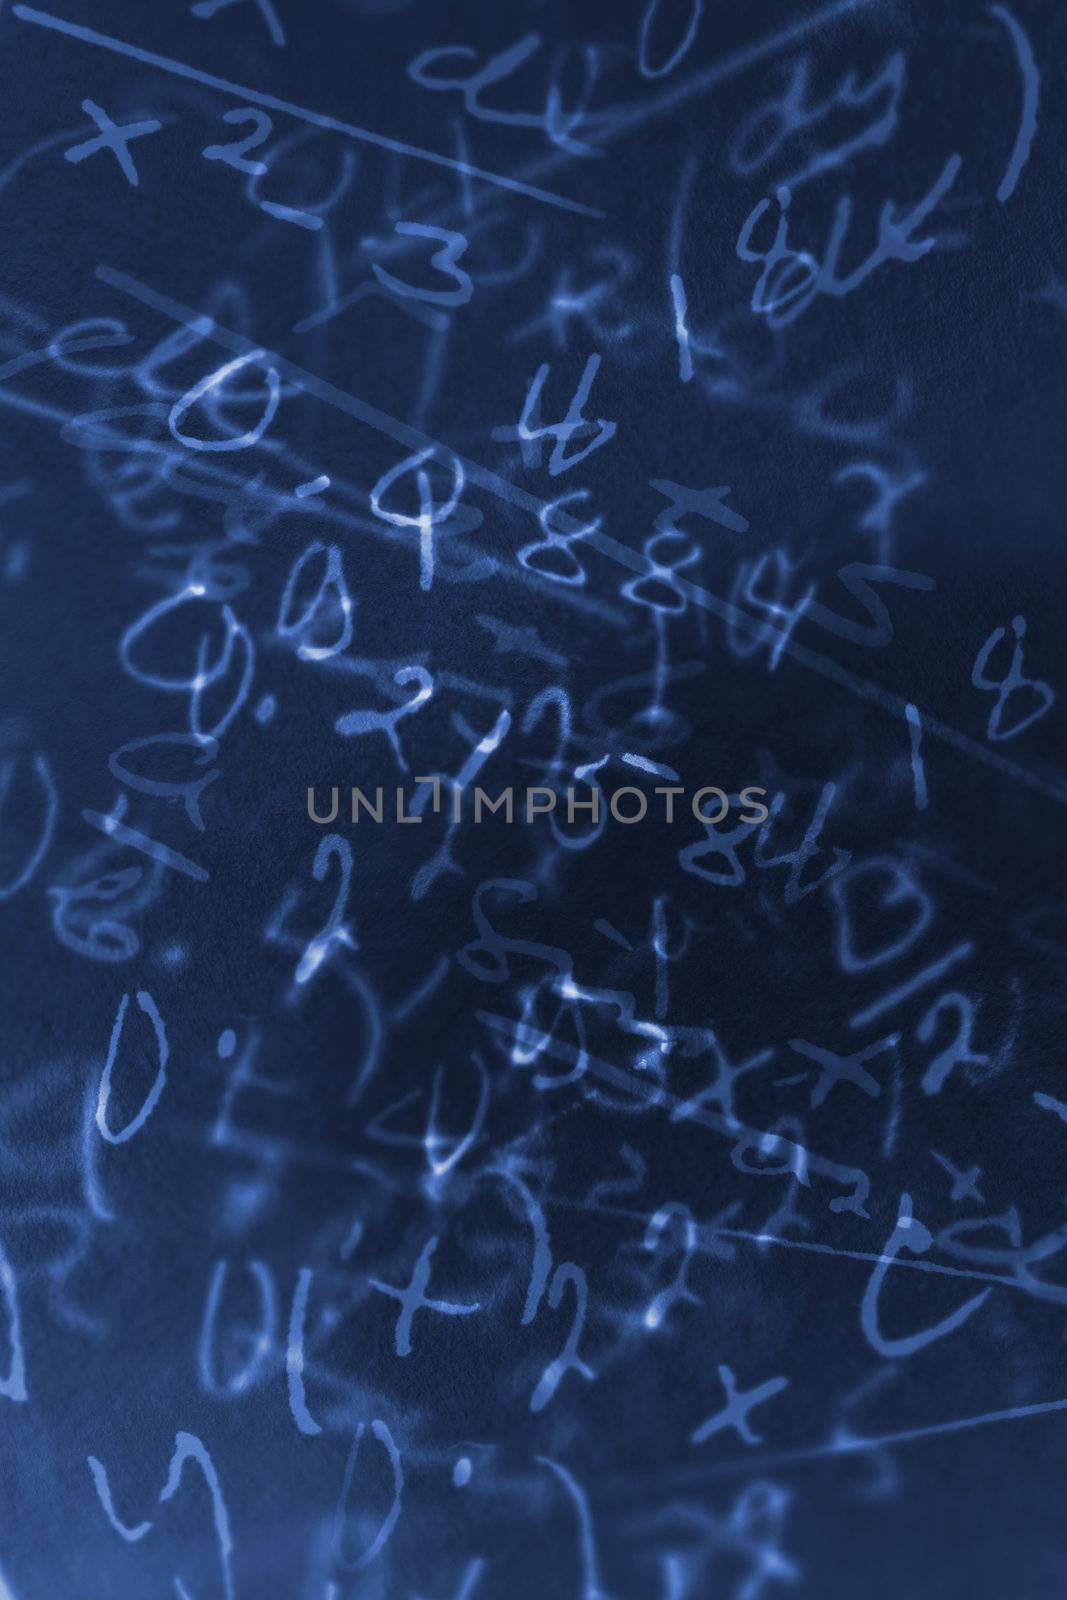 Photocomposite background of handwritten mathematical formula